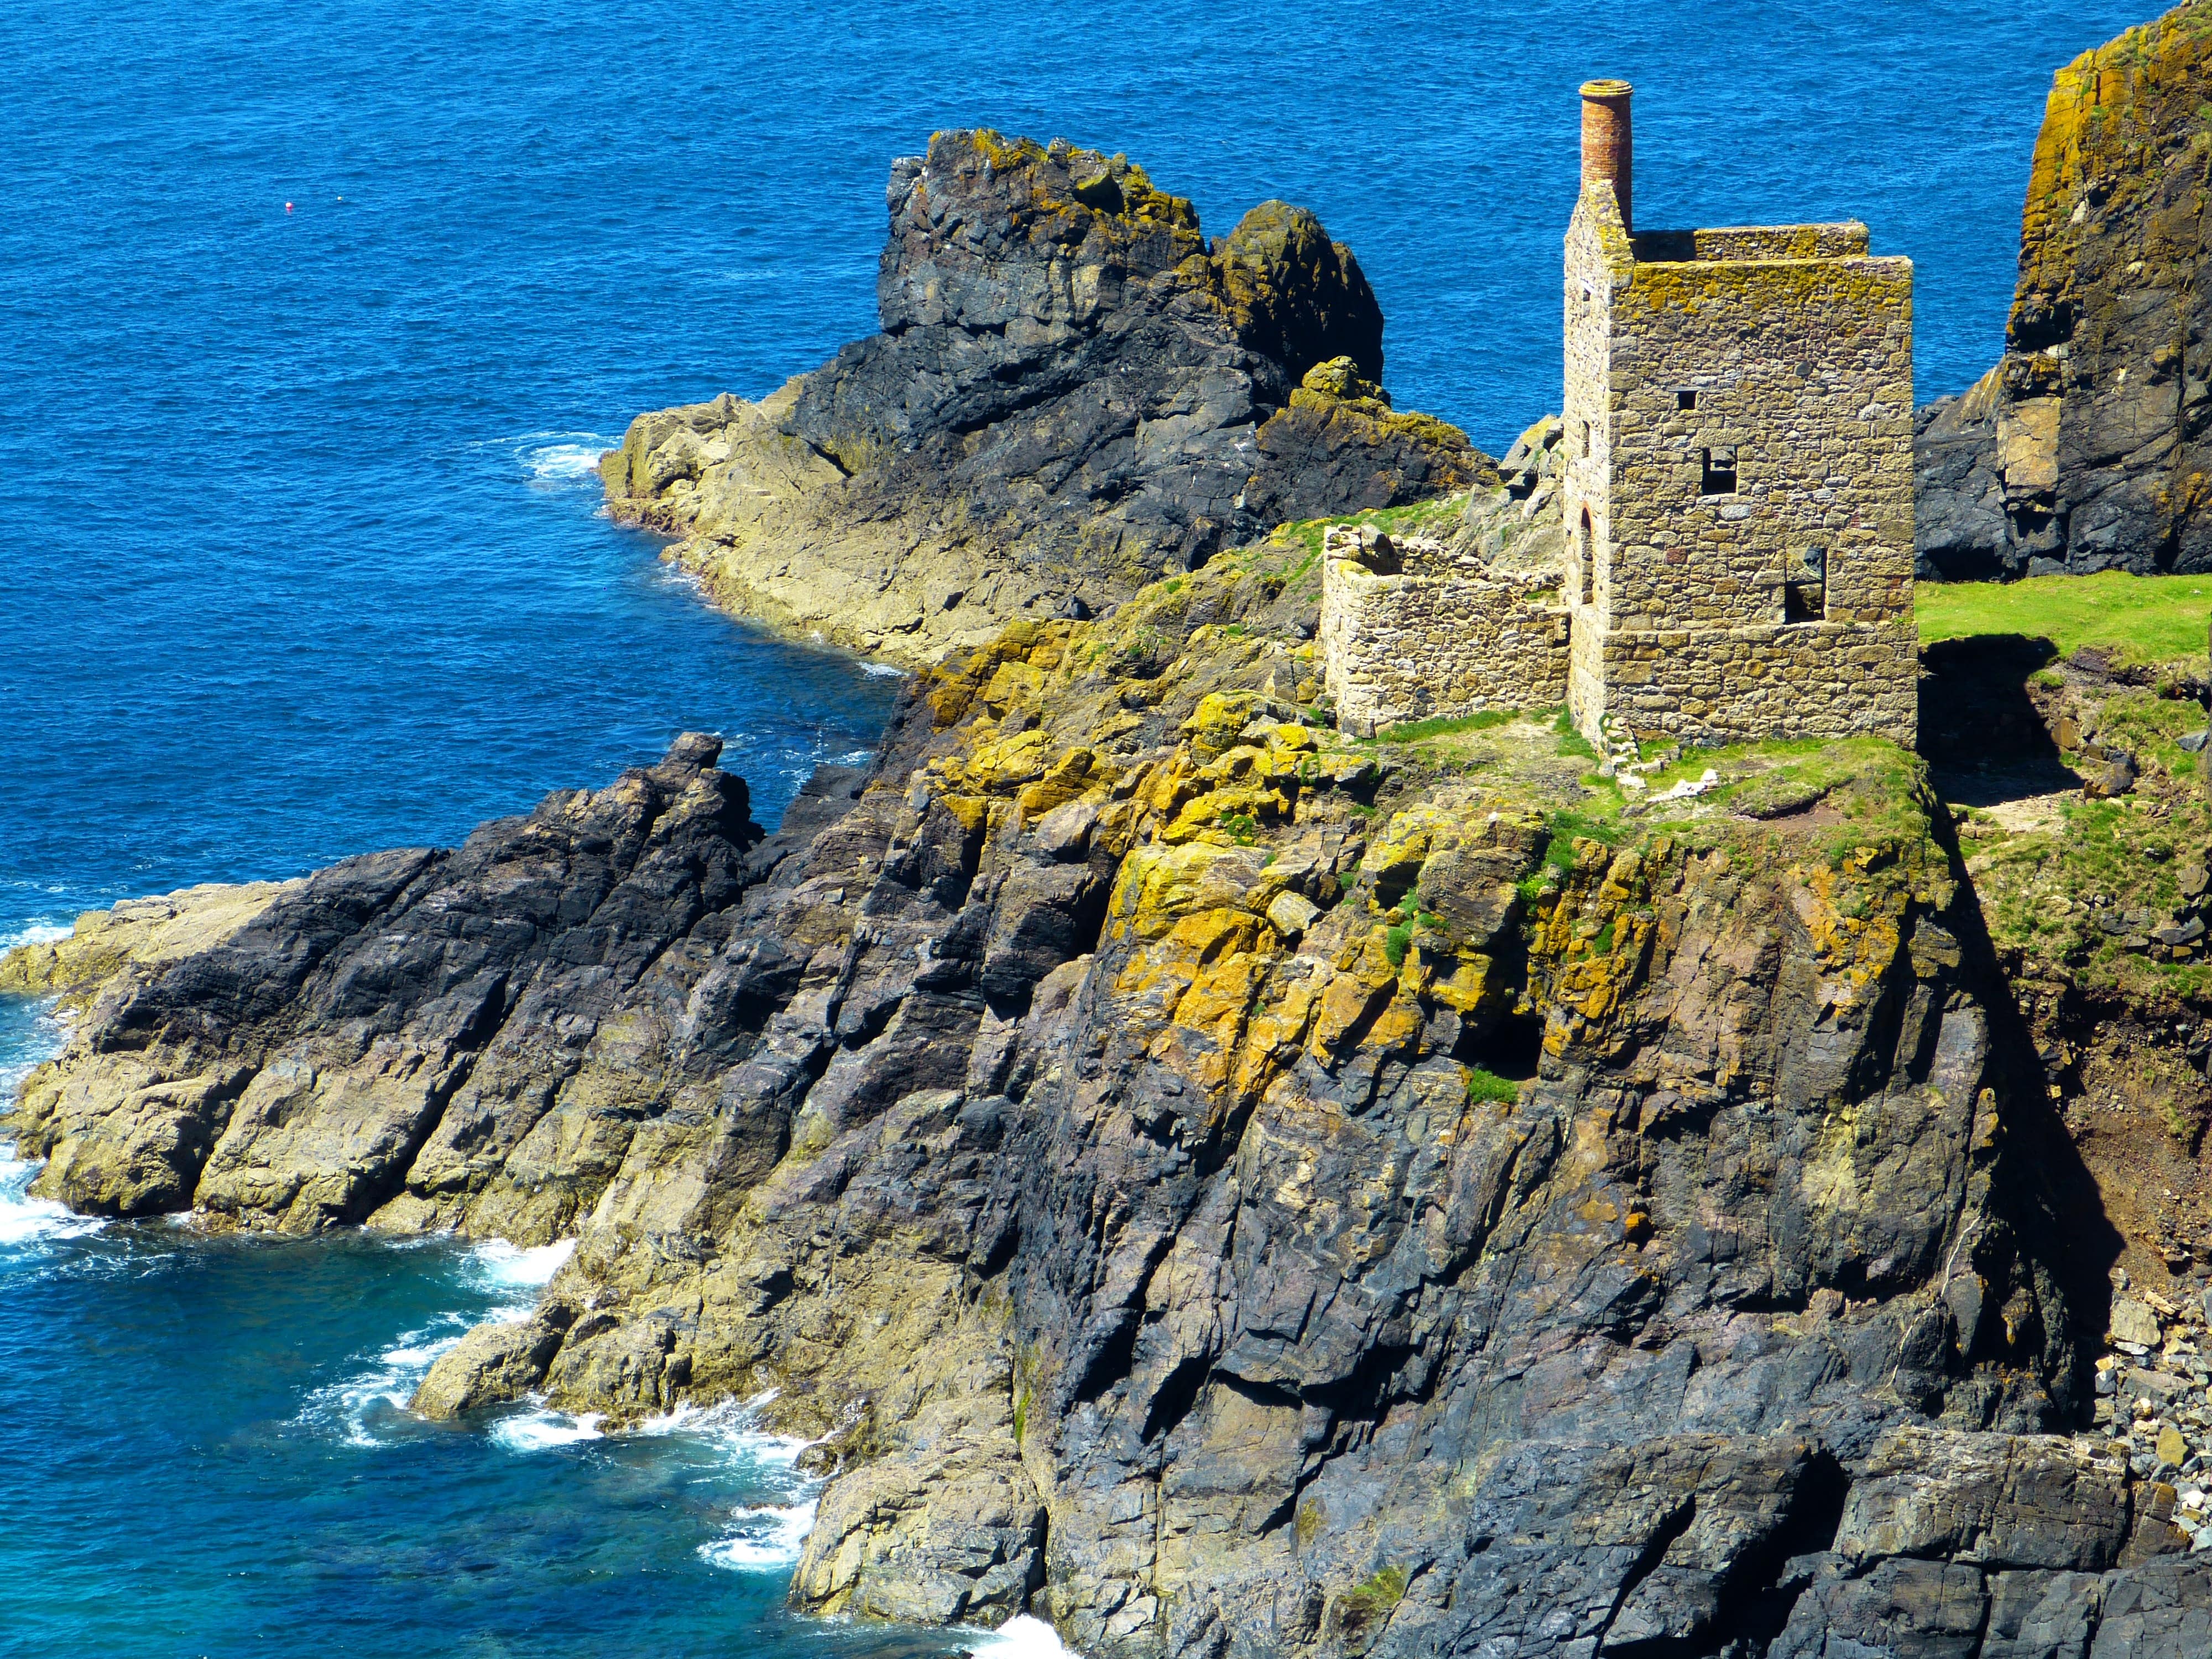 Discover secret coves along Cornwall’s stunning coastline on a UK mini break